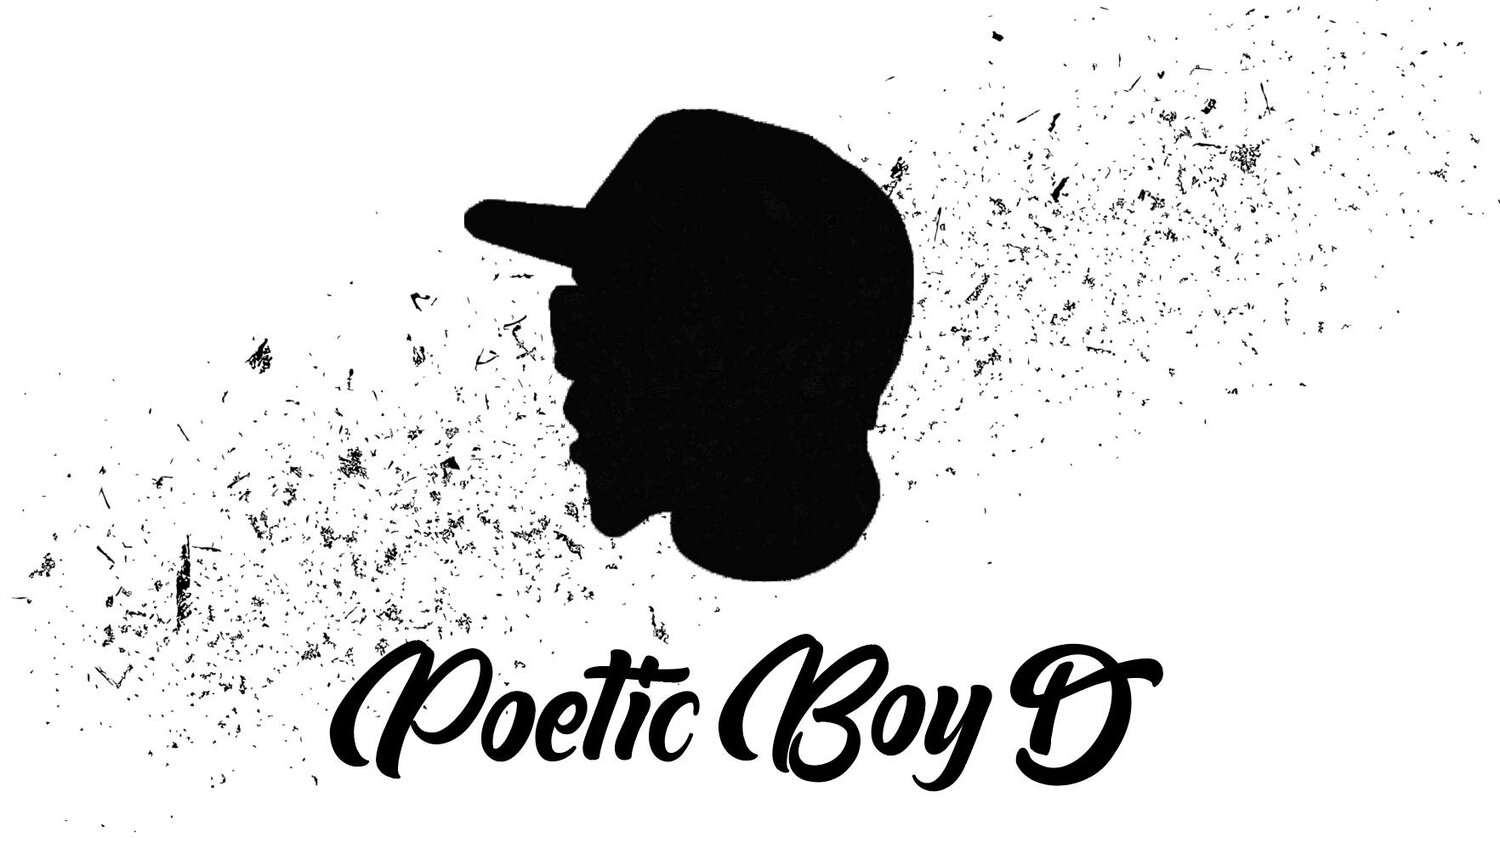 Poetic Boy D